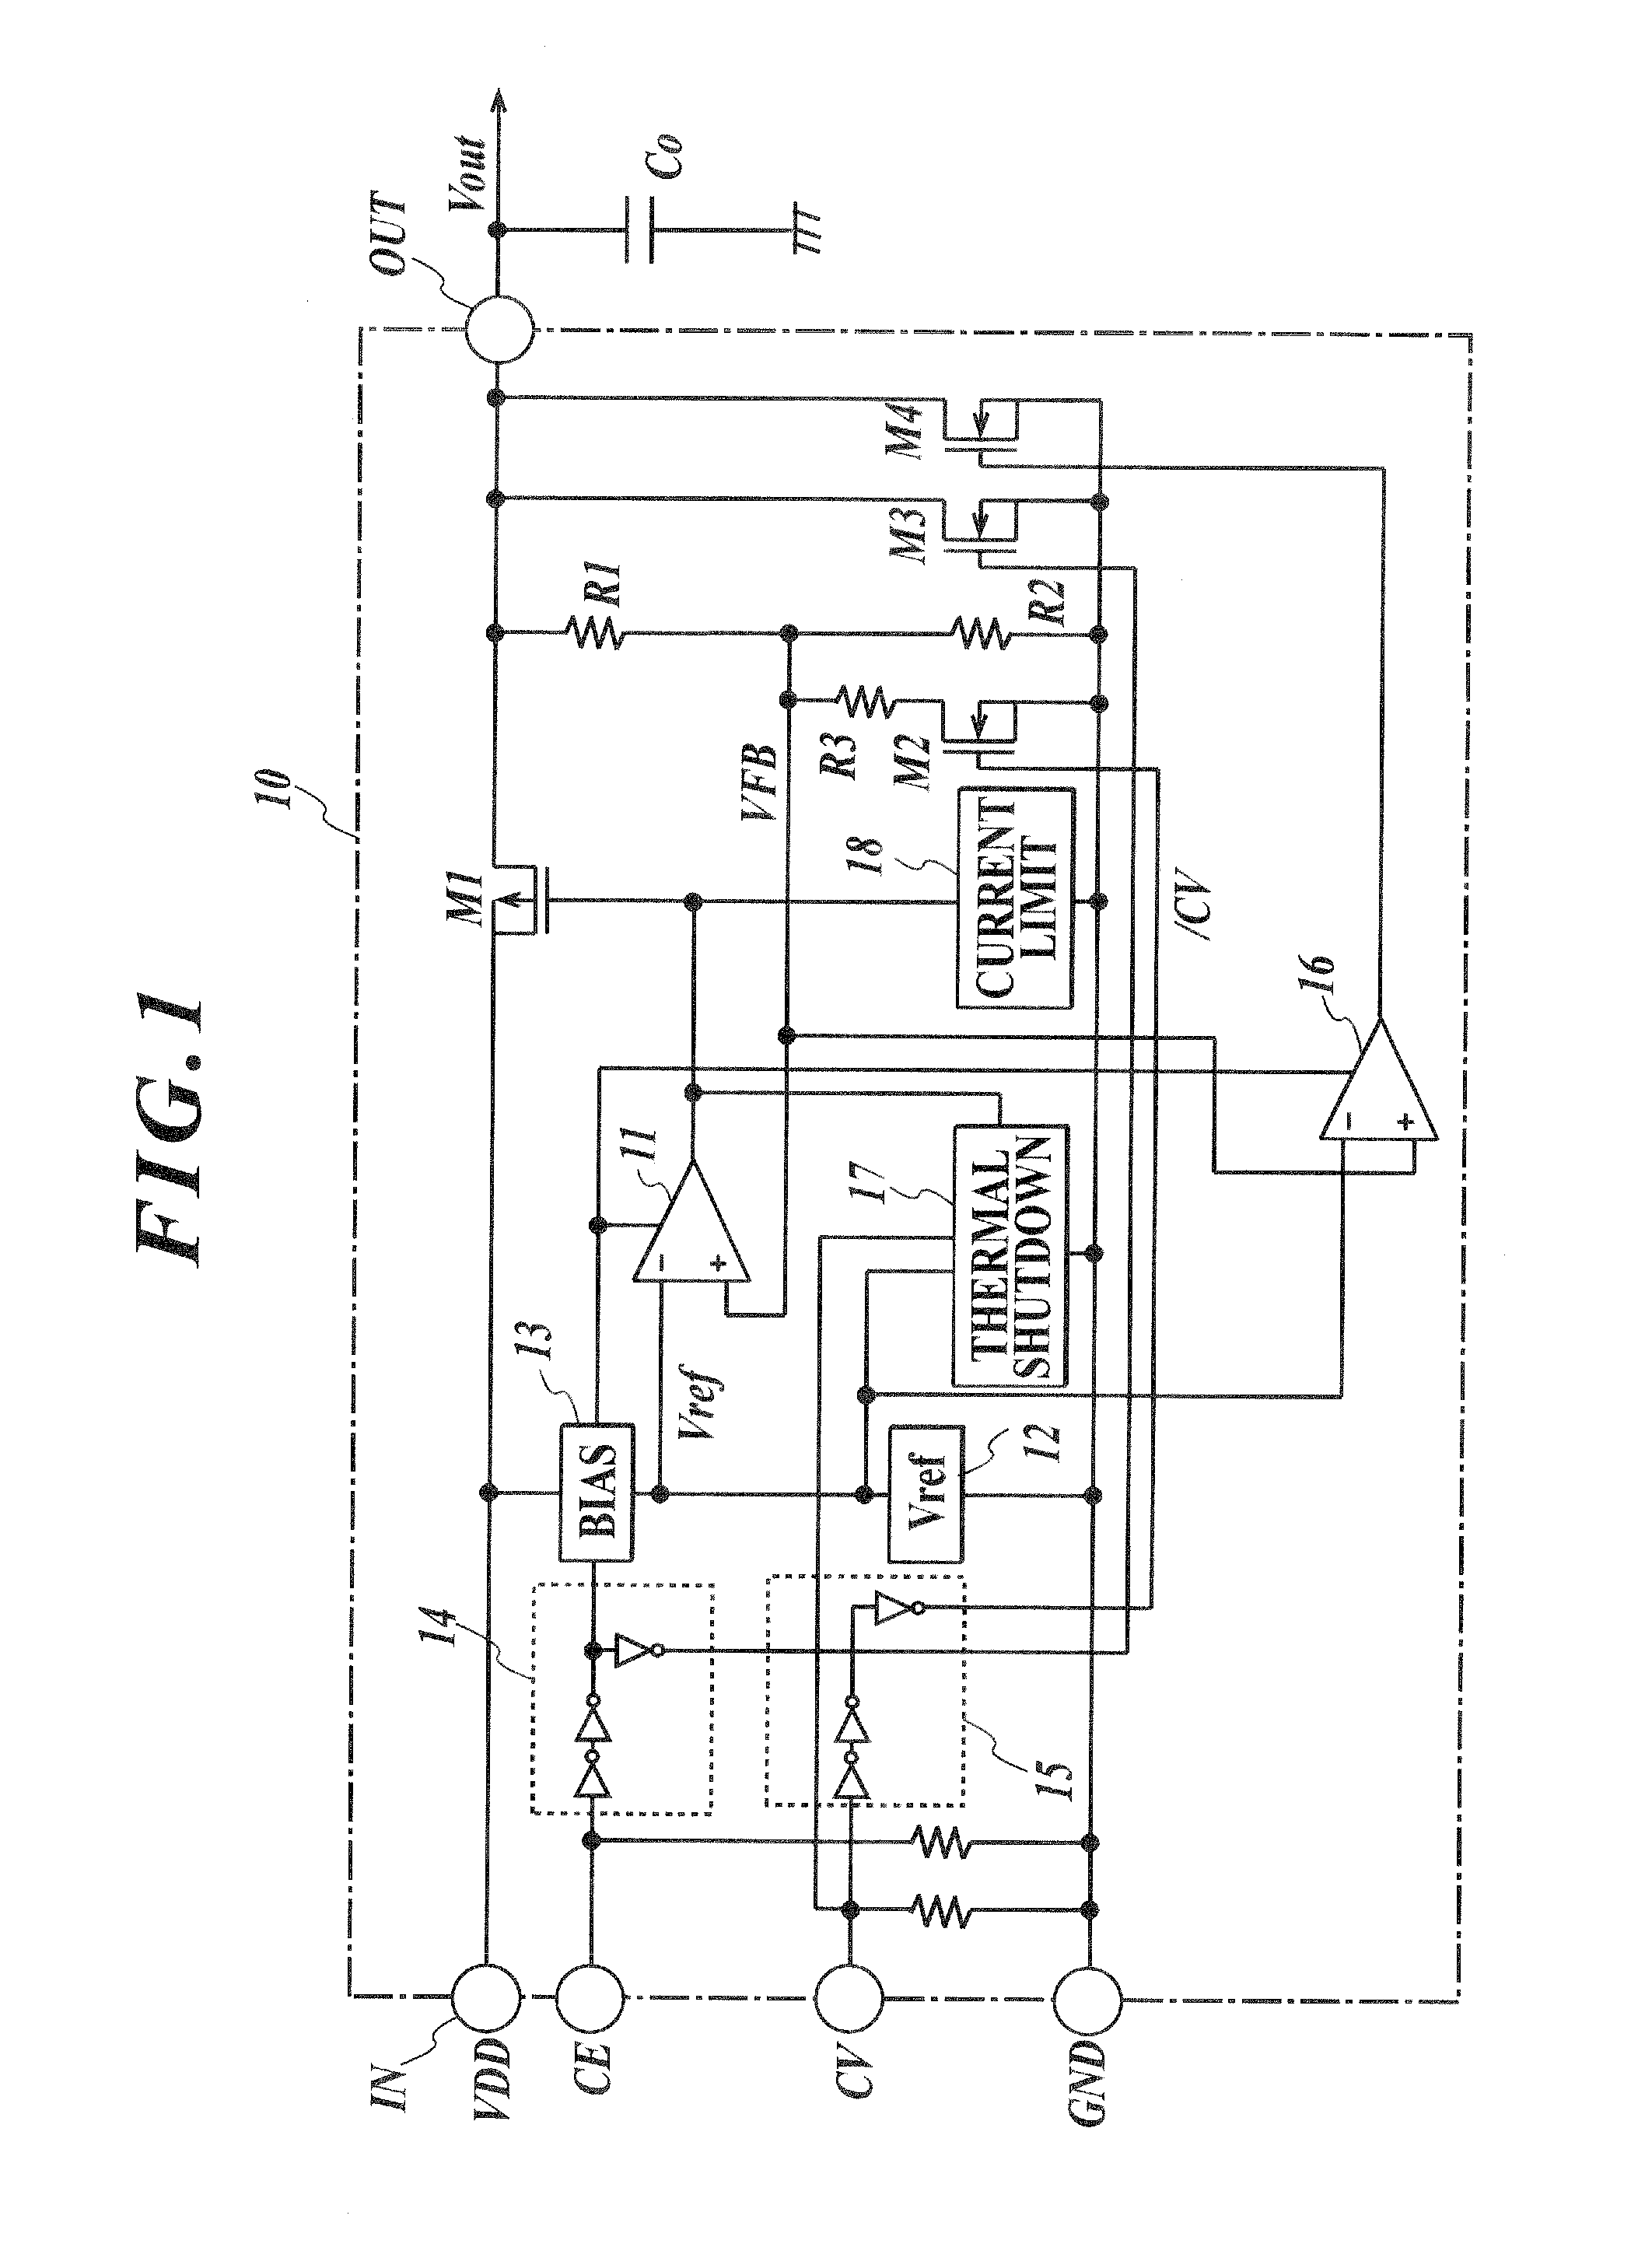 Semiconductor integrated circuit for regulator